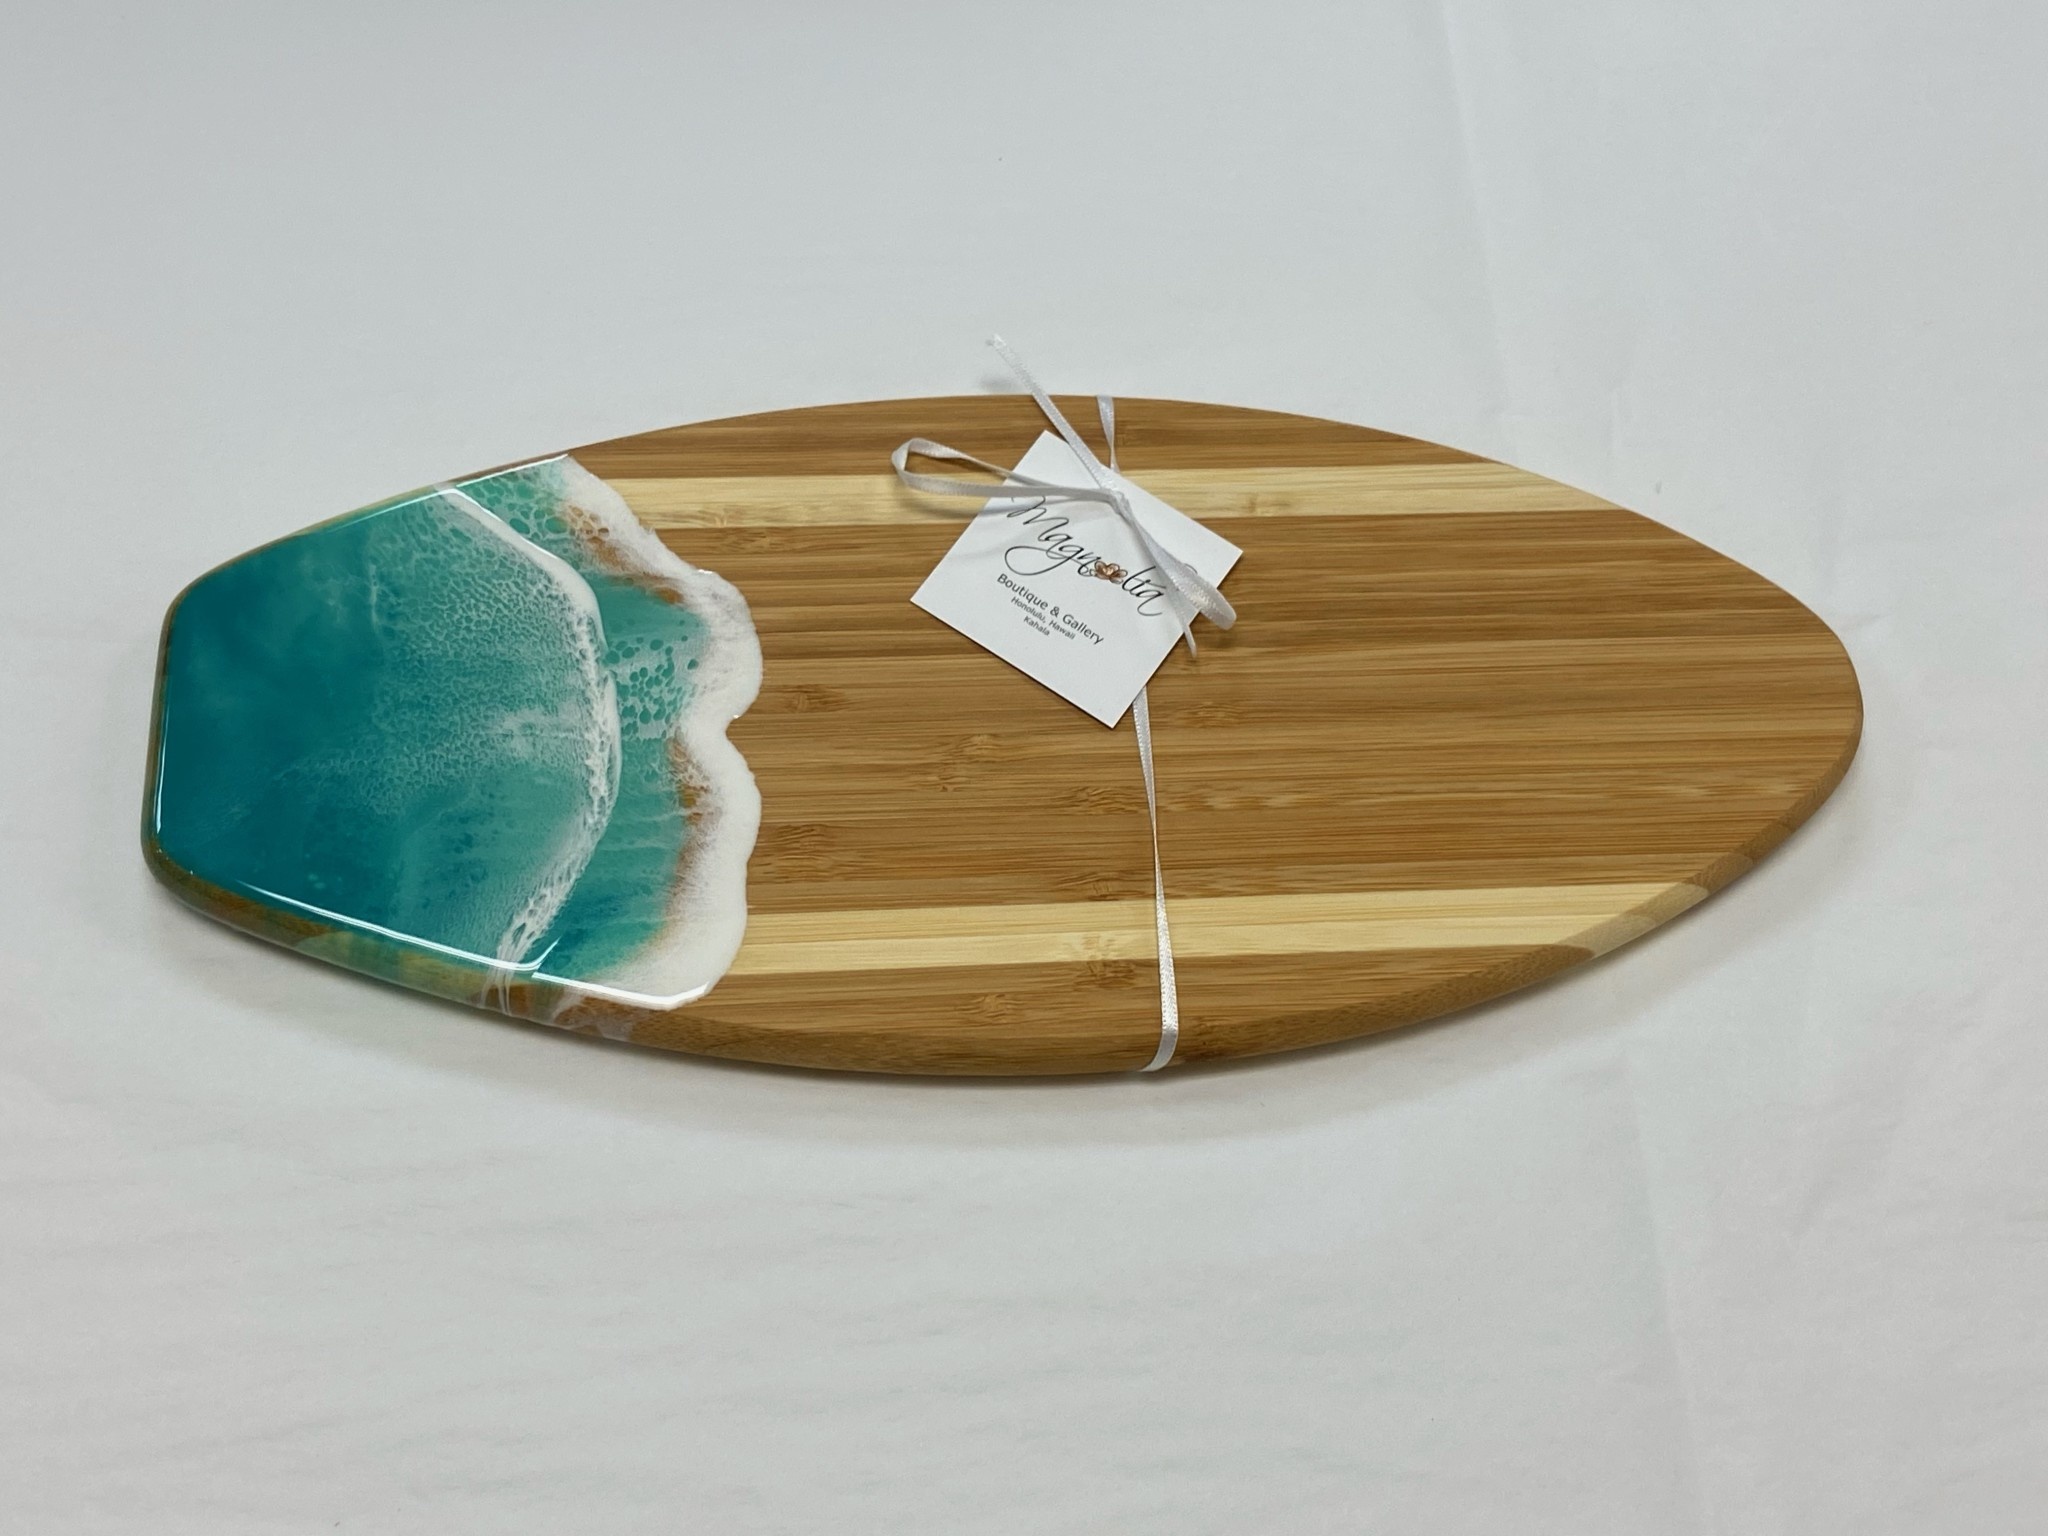 https://cdn.shoplightspeed.com/shops/644977/files/38643358/marr-art-works-small-surfboard-serving-board.jpg